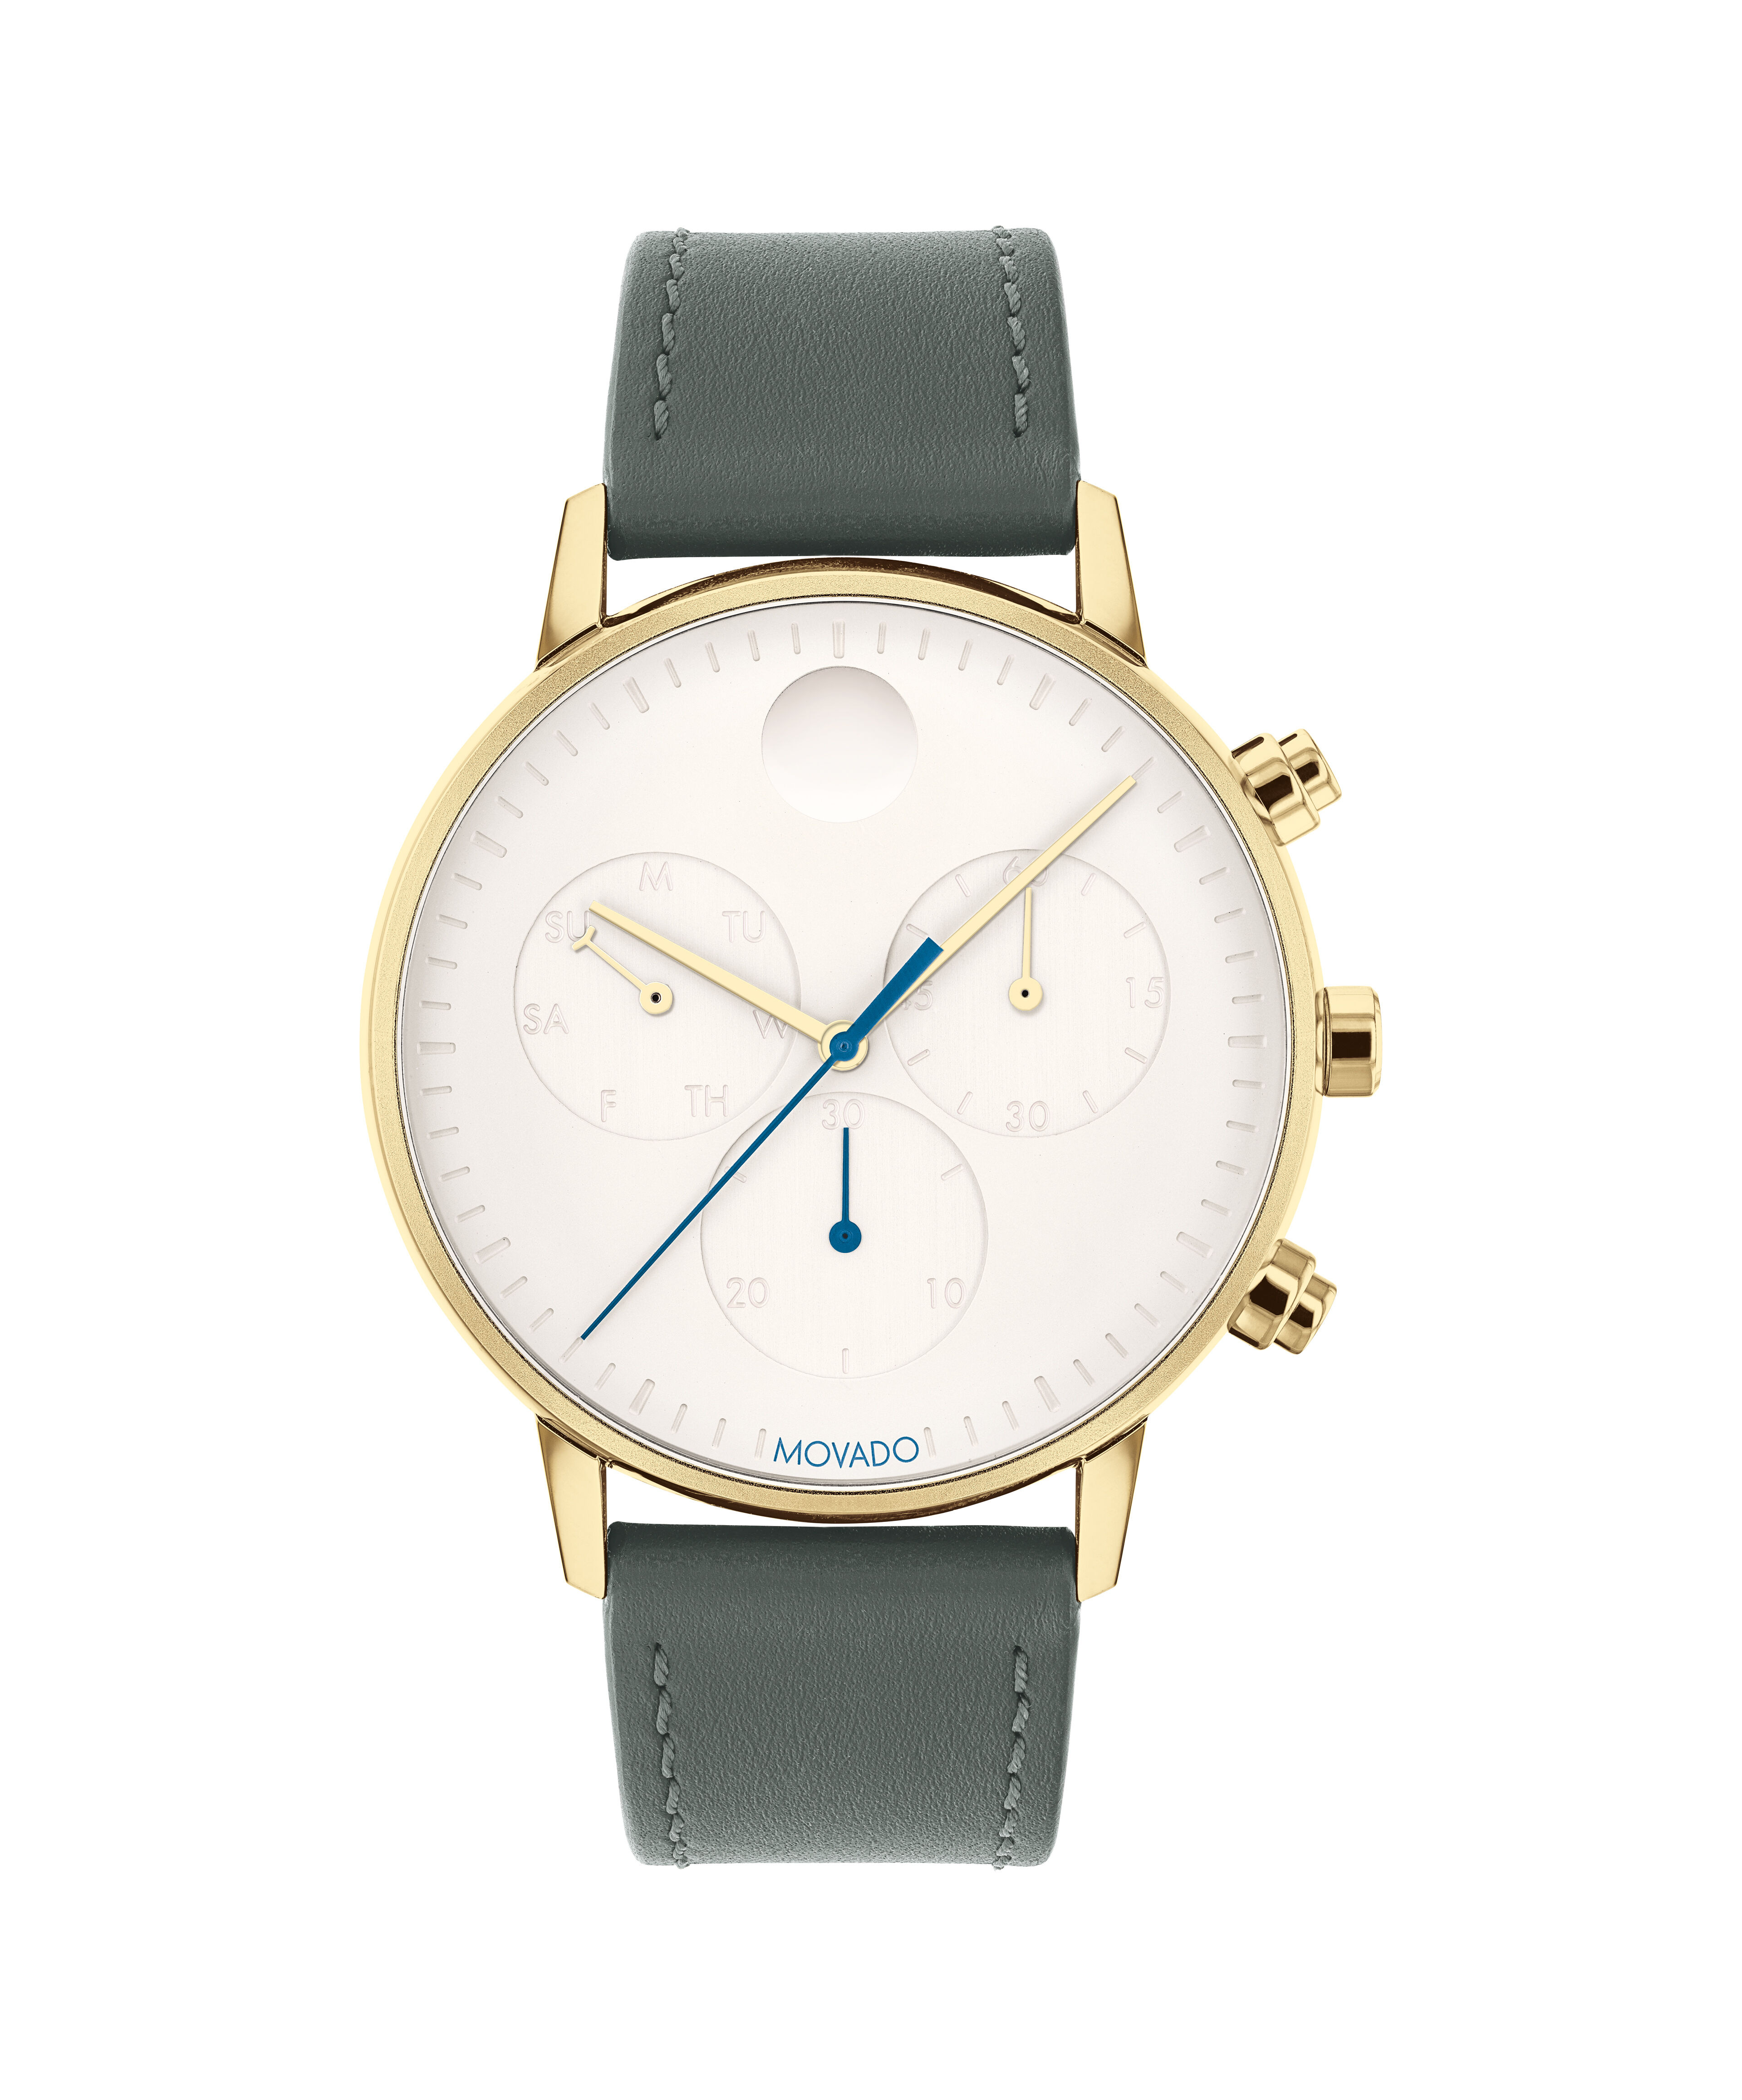 Replica Dior Moon Watch